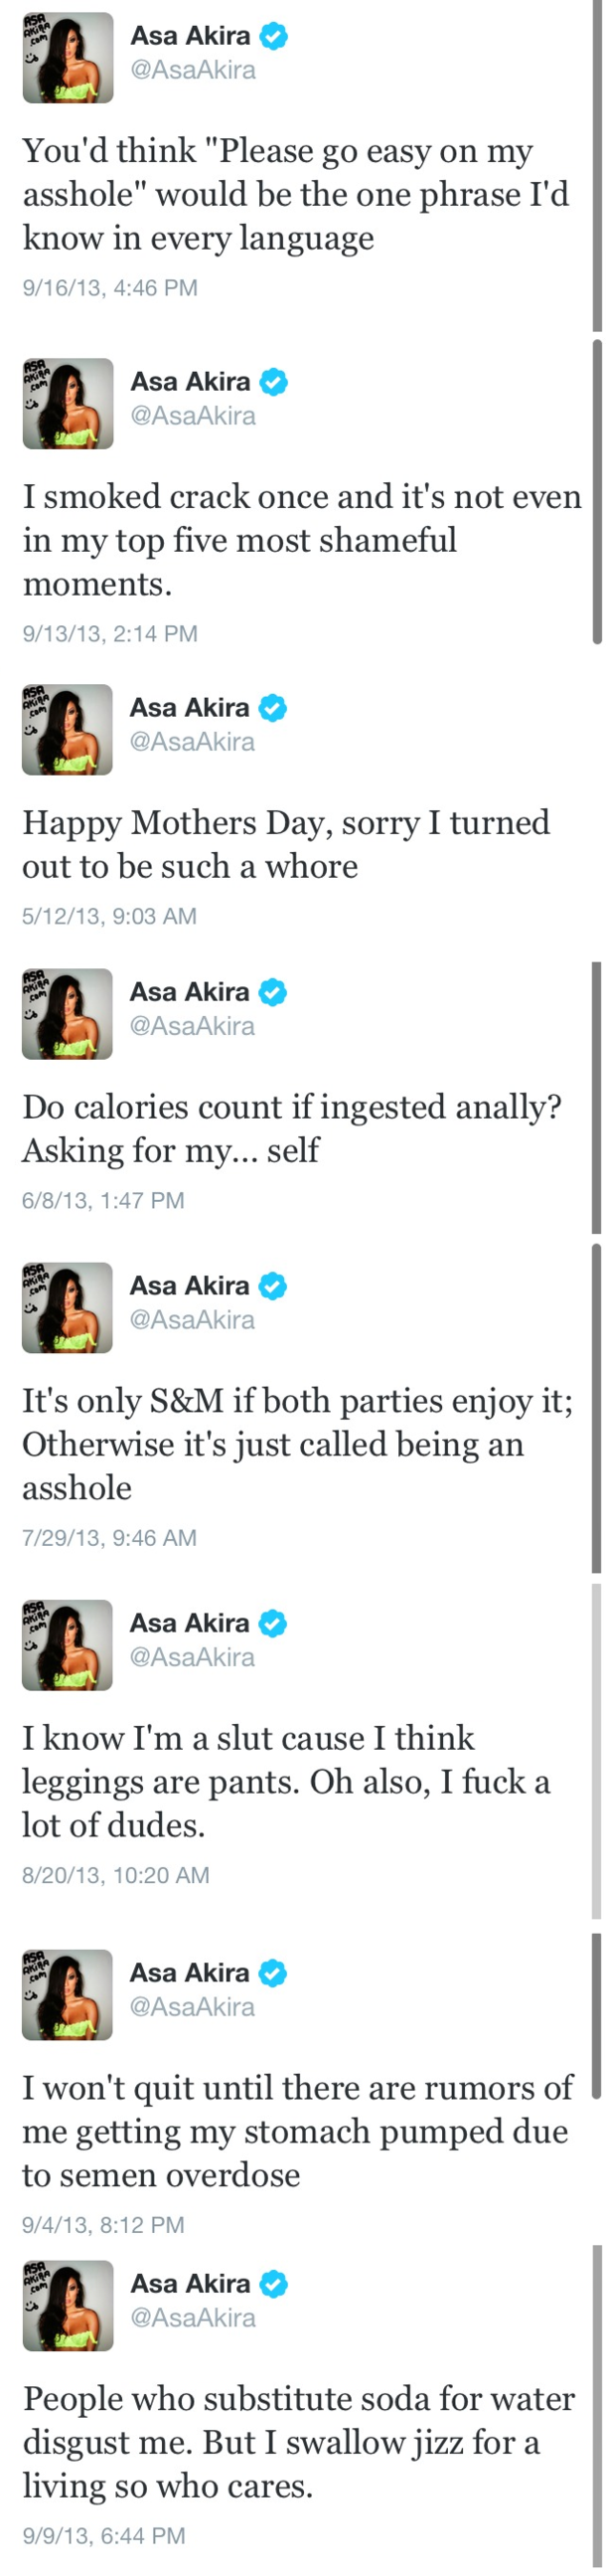 Asa Akira everybody